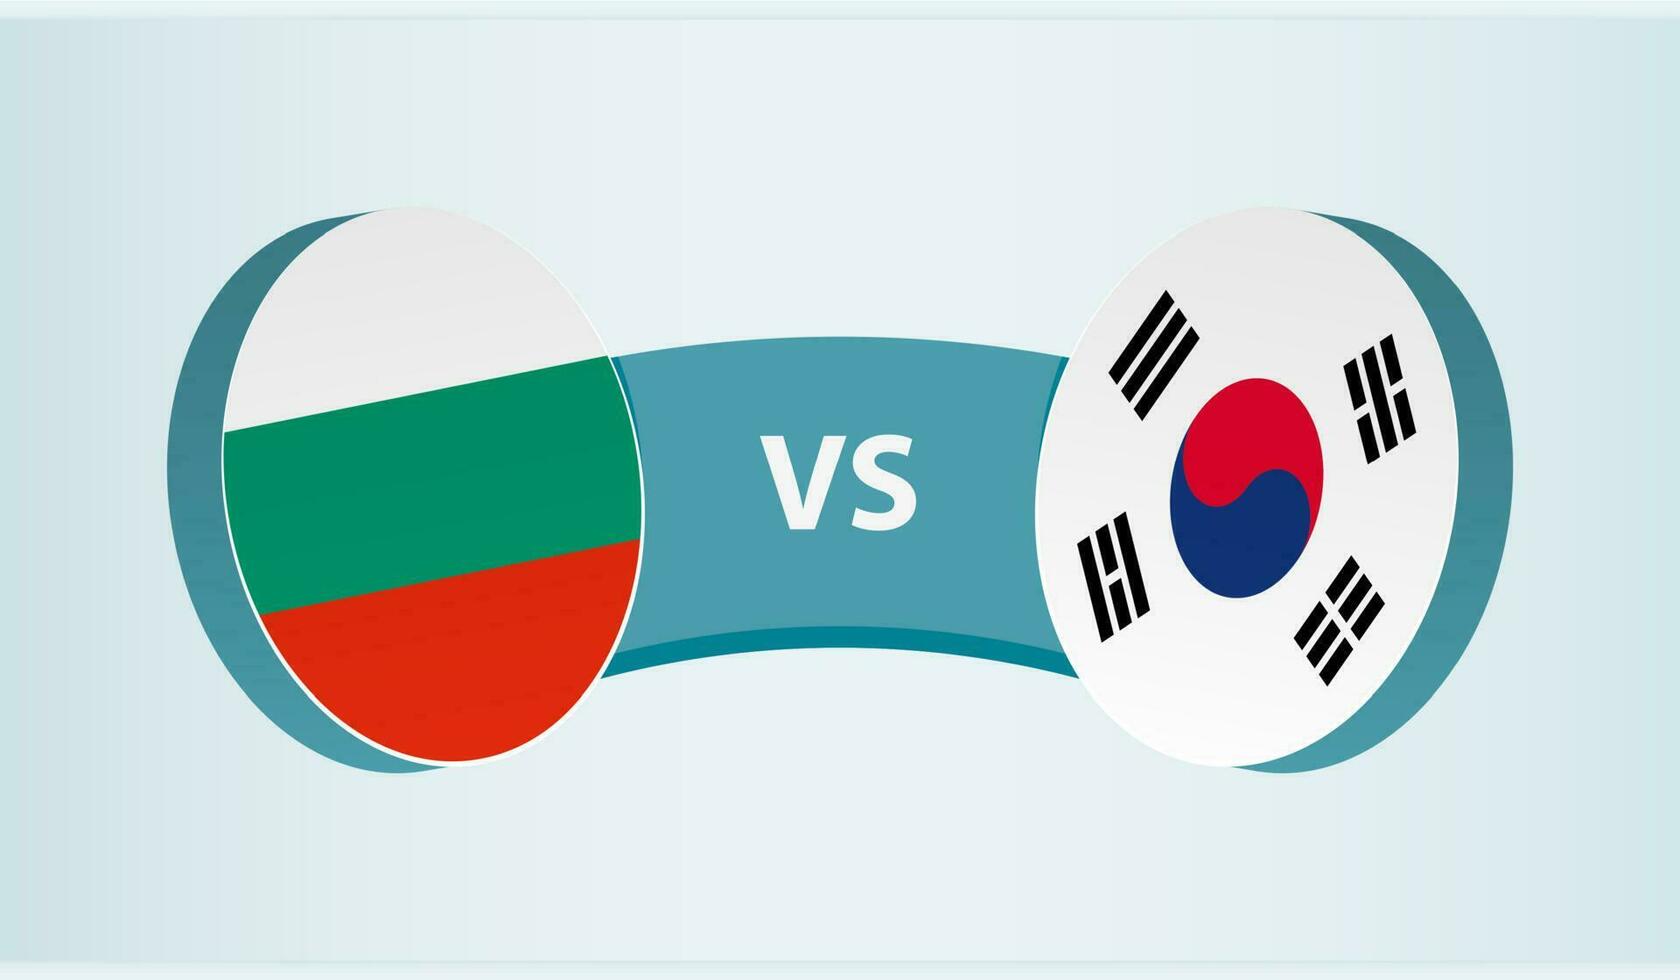 Bulgaria versus South Korea, team sports competition concept. vector